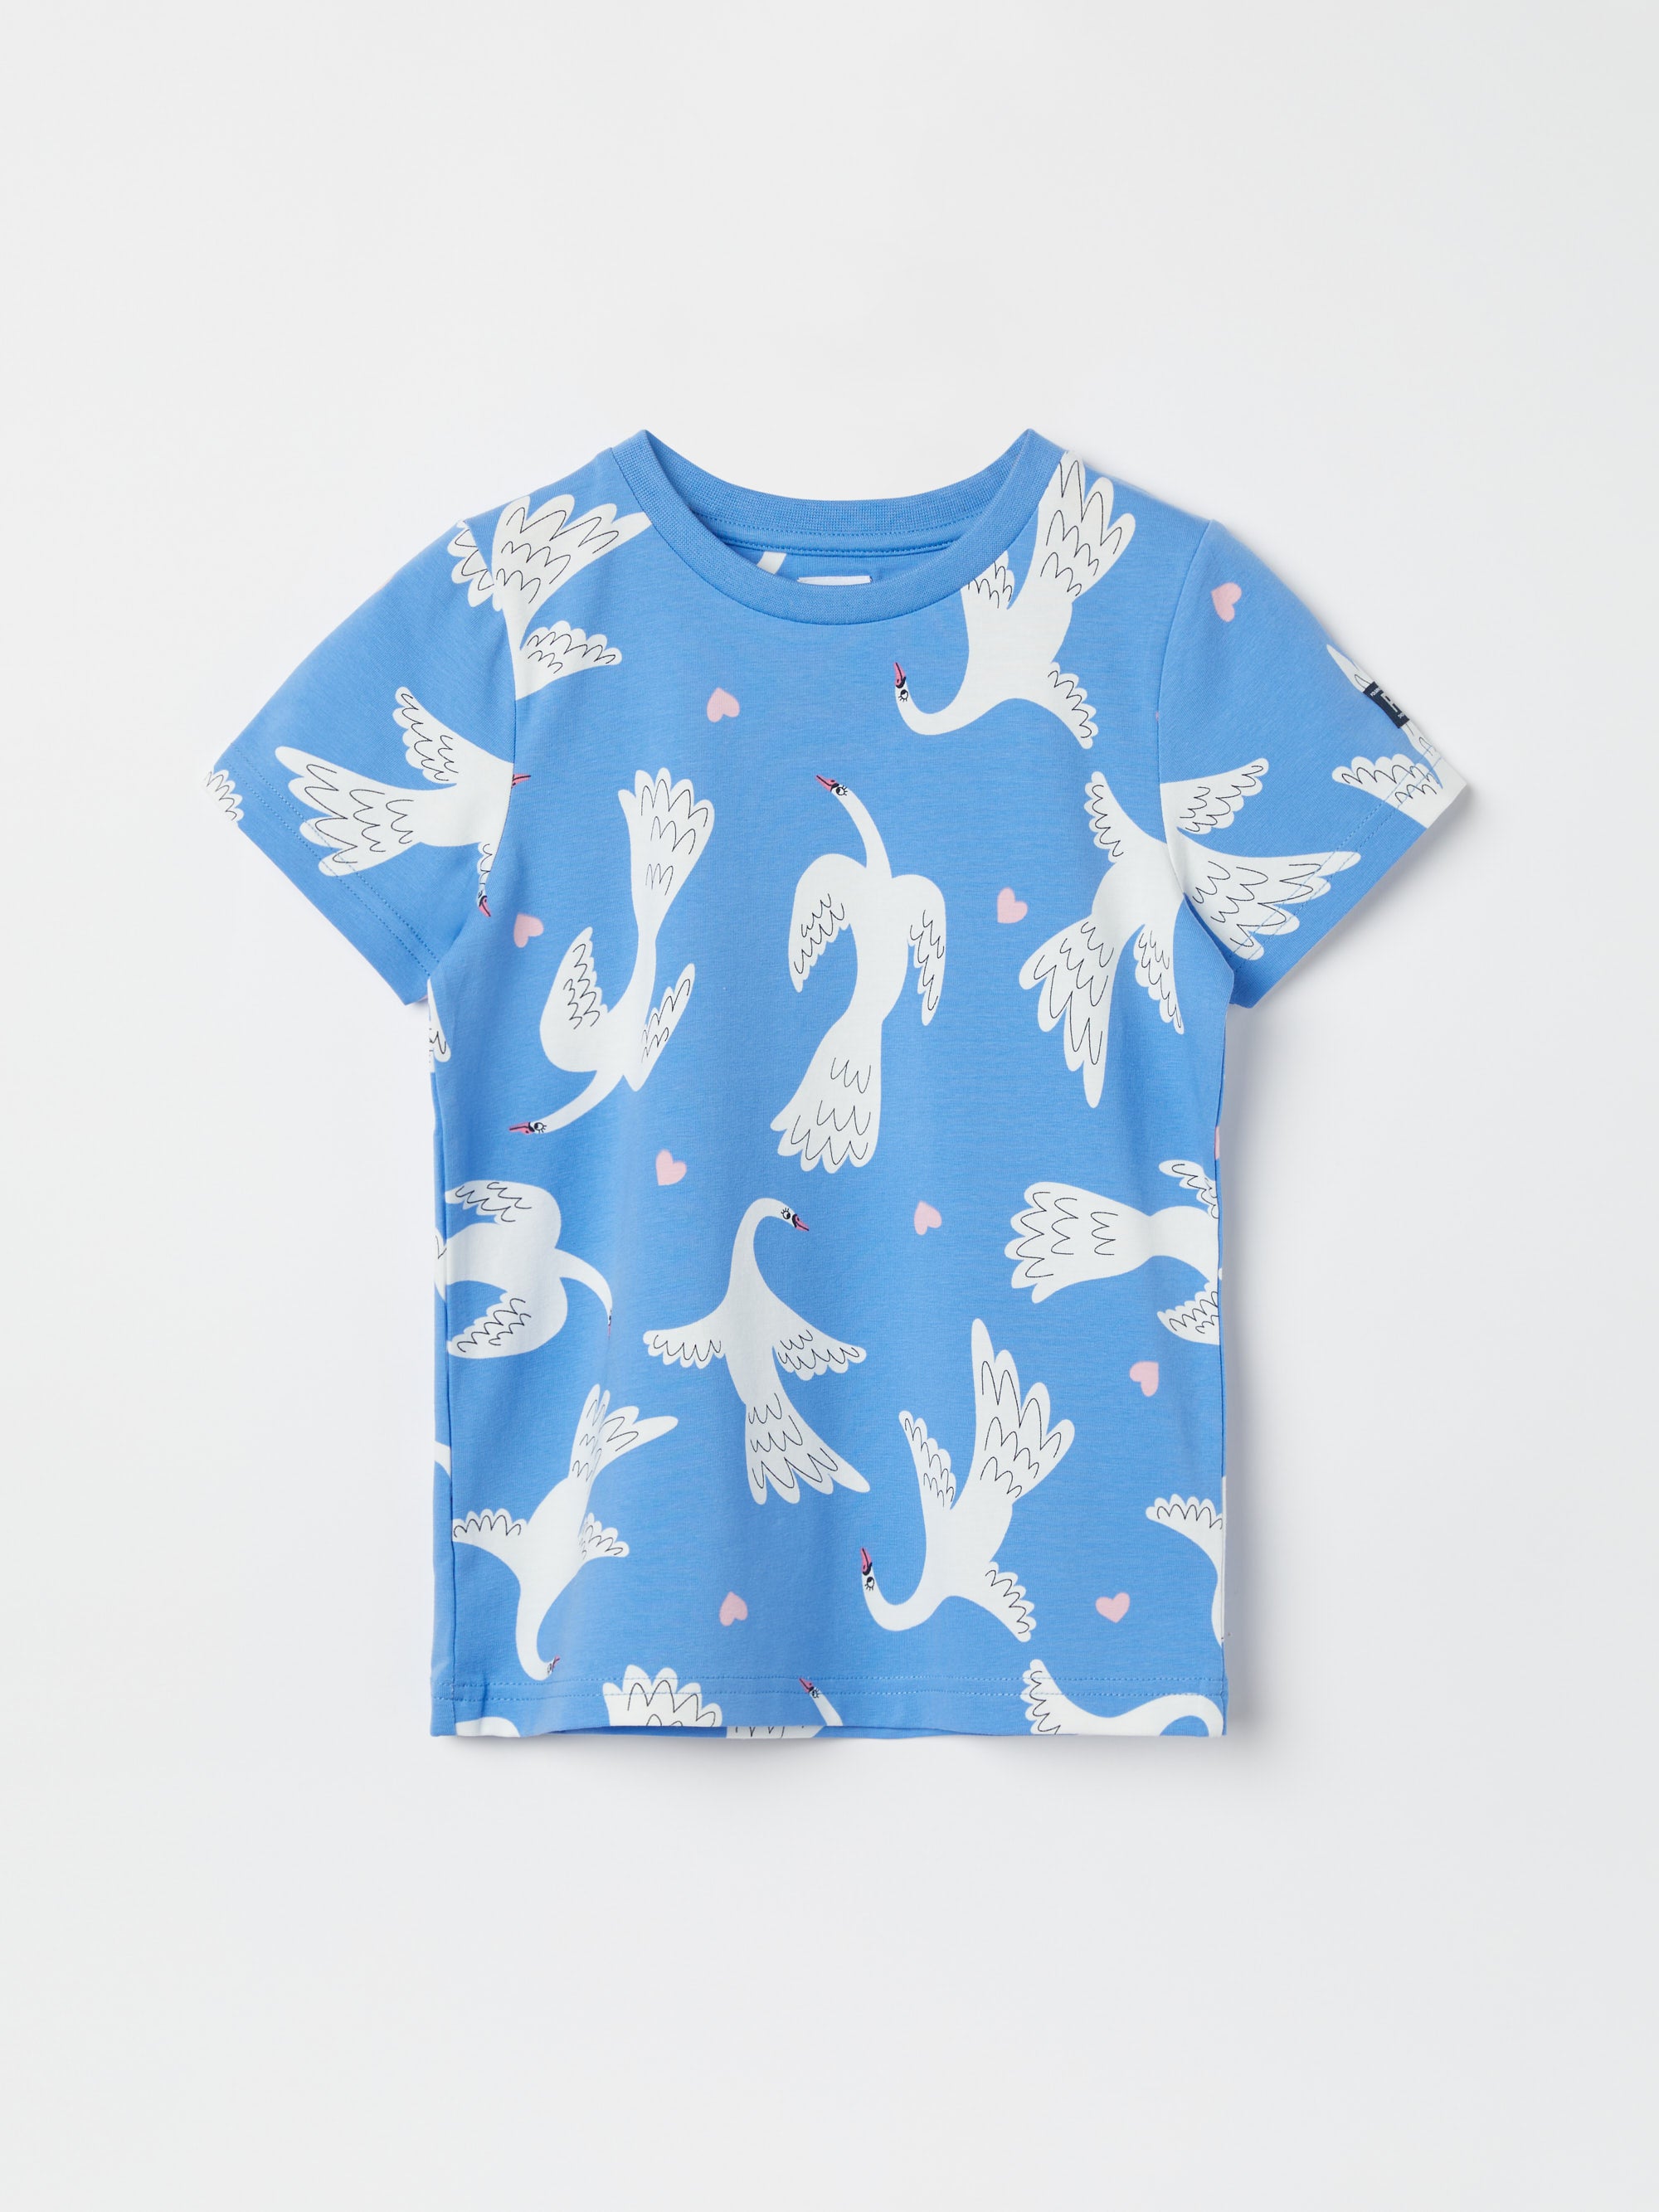 Swan Print Kids T-Shirt